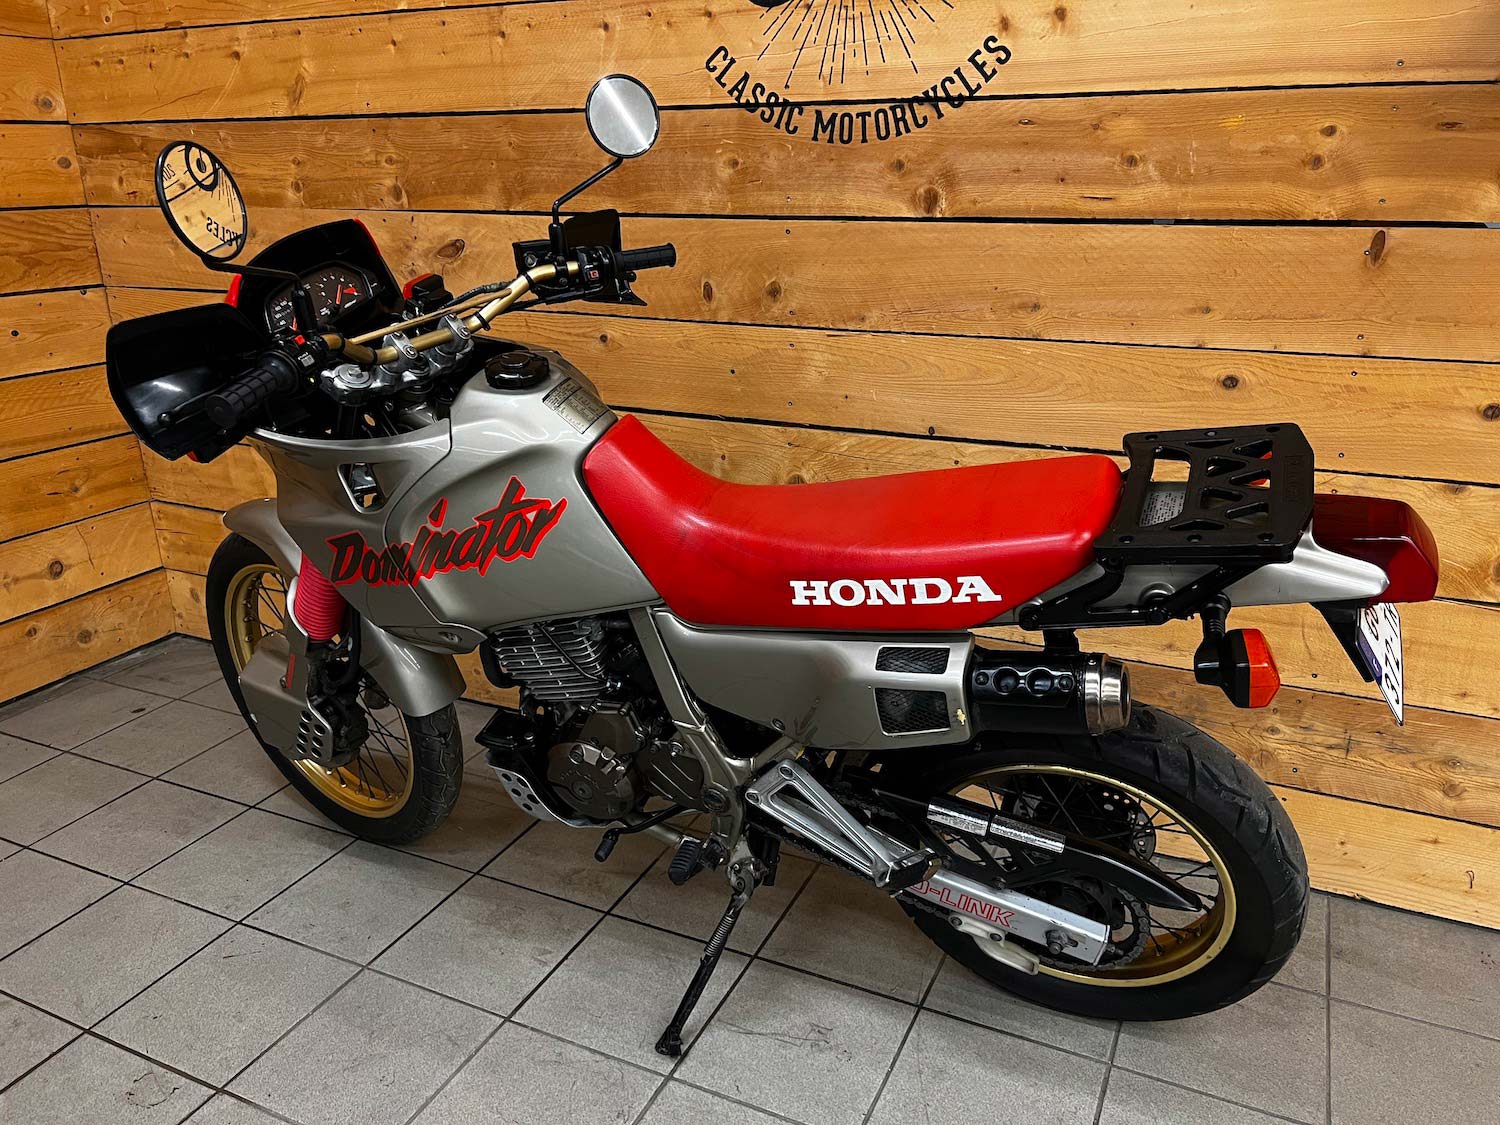 Honda_dominator_Cezanne_classic_Motorcycle_9-152.jpg